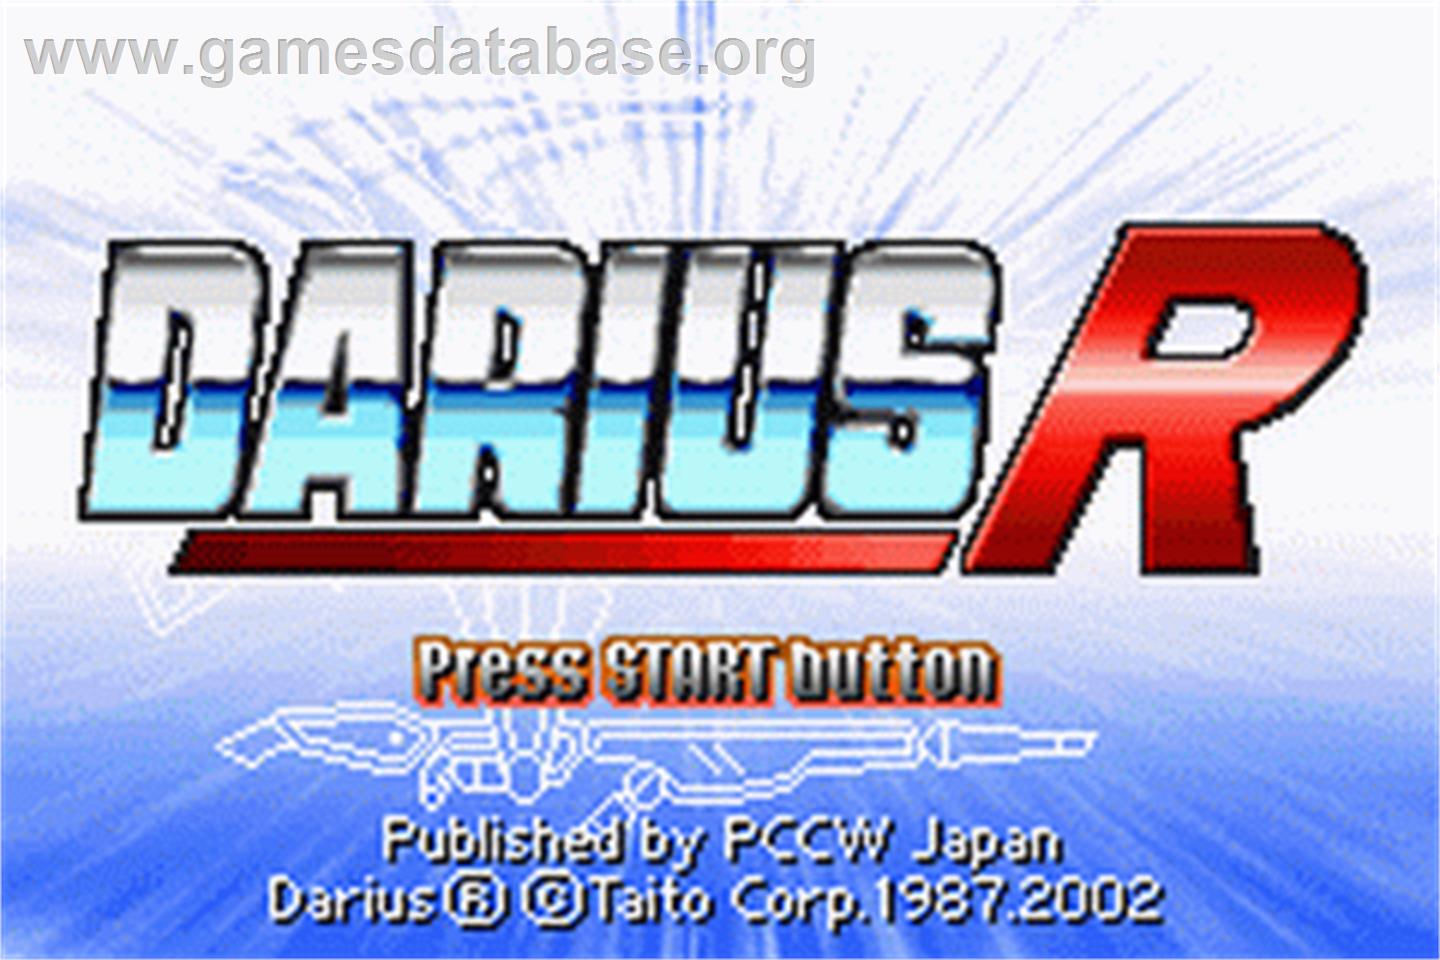 Darius R - Nintendo Game Boy Advance - Artwork - Title Screen